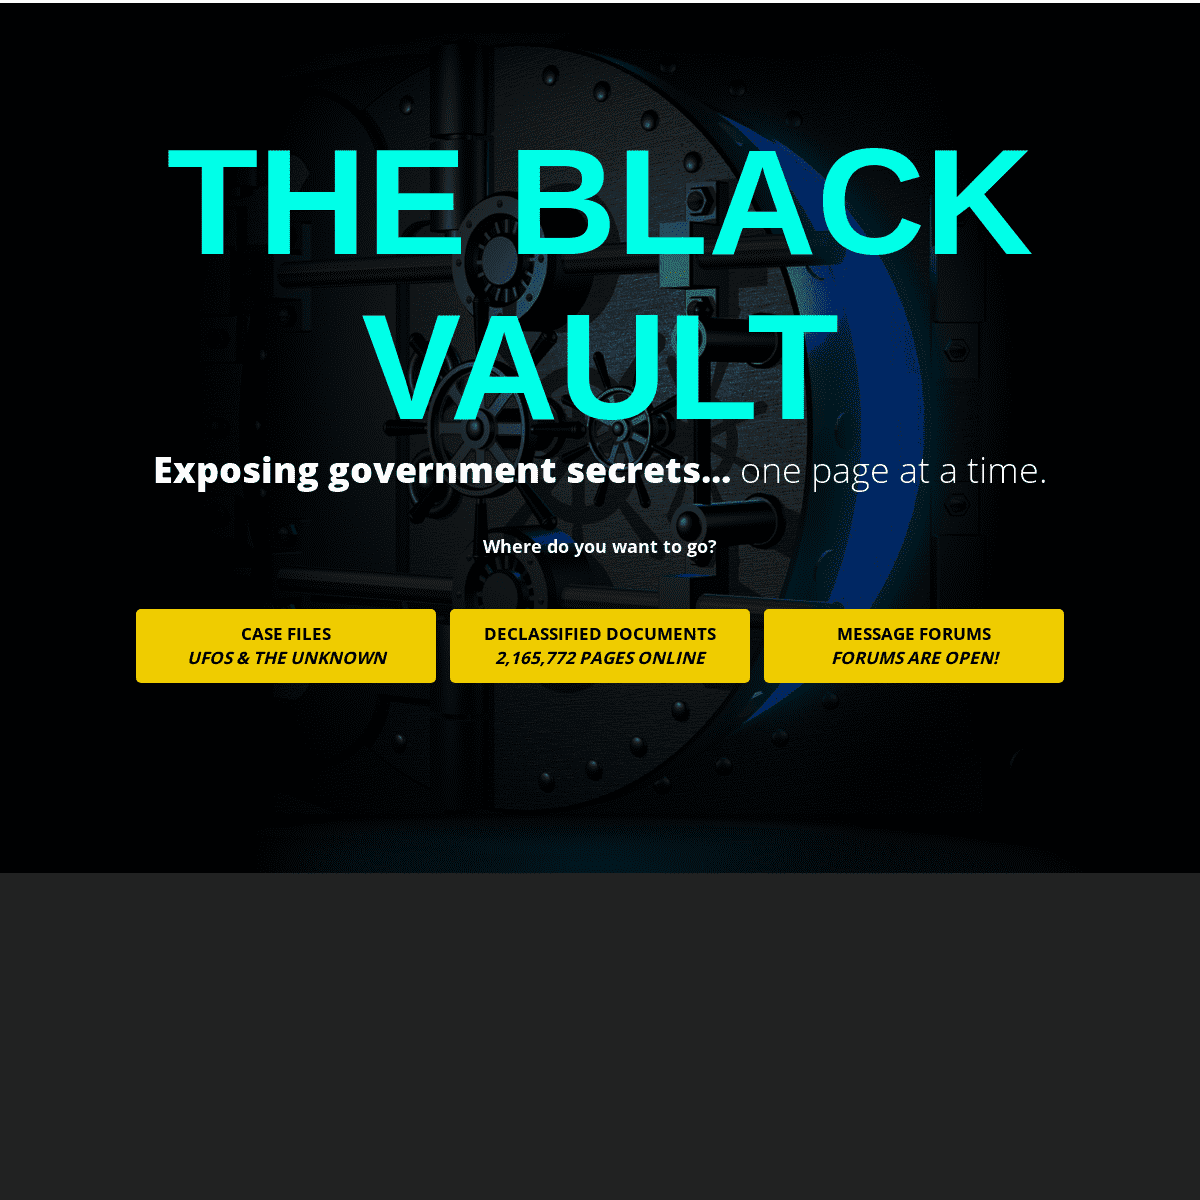 A complete backup of theblackvault.com